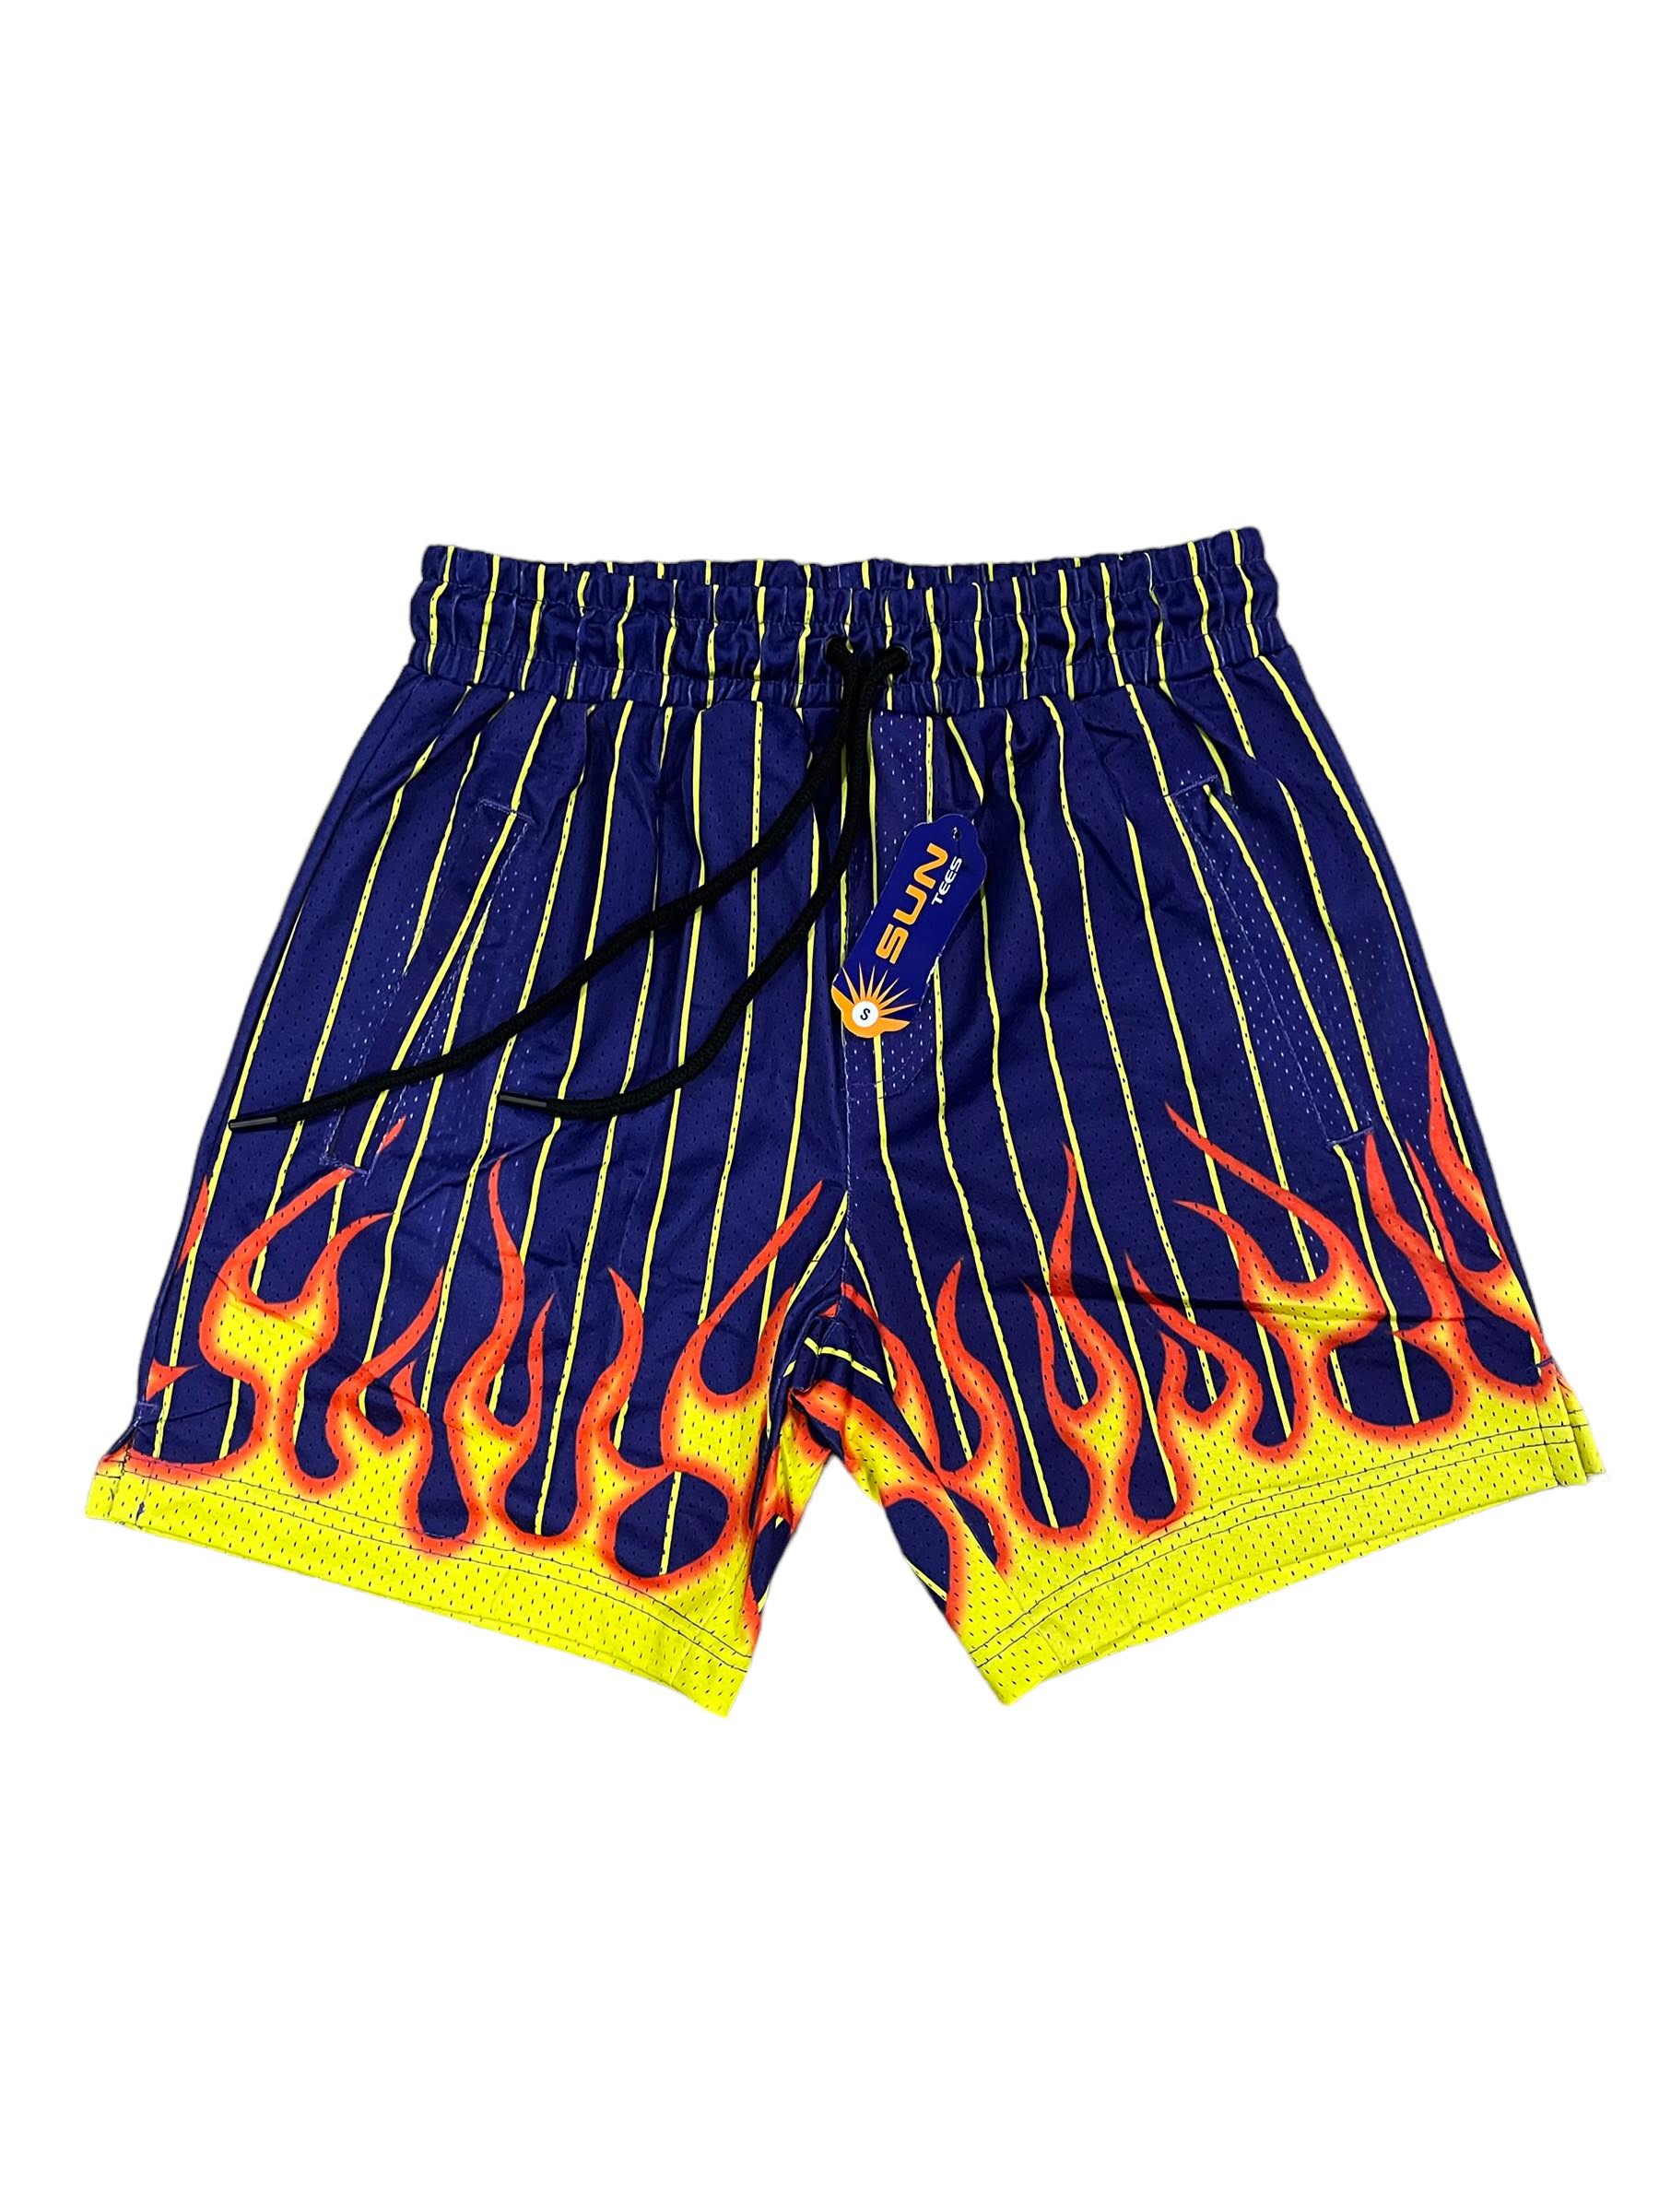 flame Mesh shorts